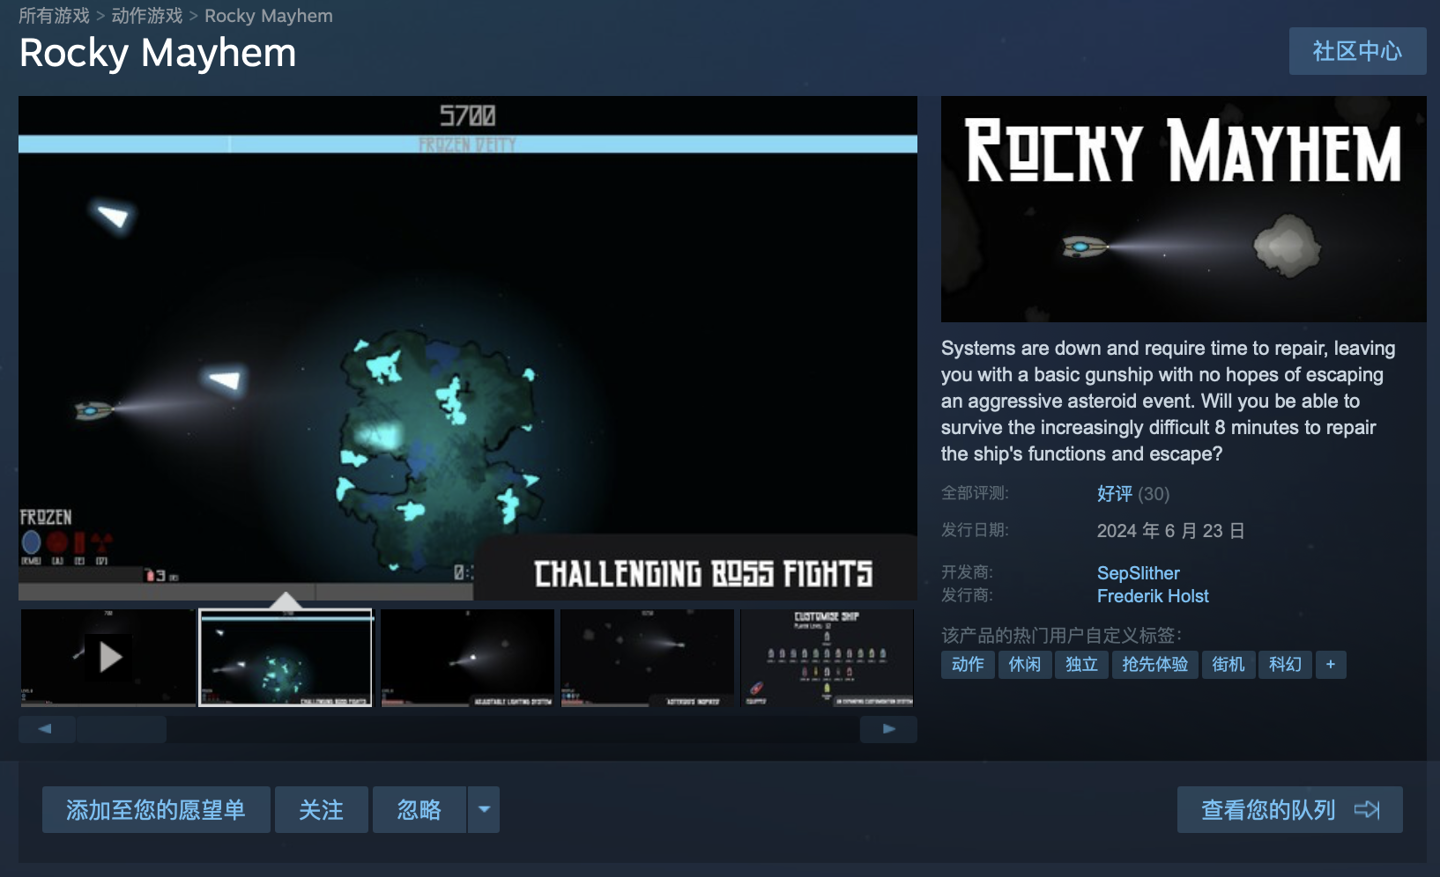 Steam 喜加一：“躲避小行星”休闲游戏《Rocky Mayhem》8 月 1 日前免费领